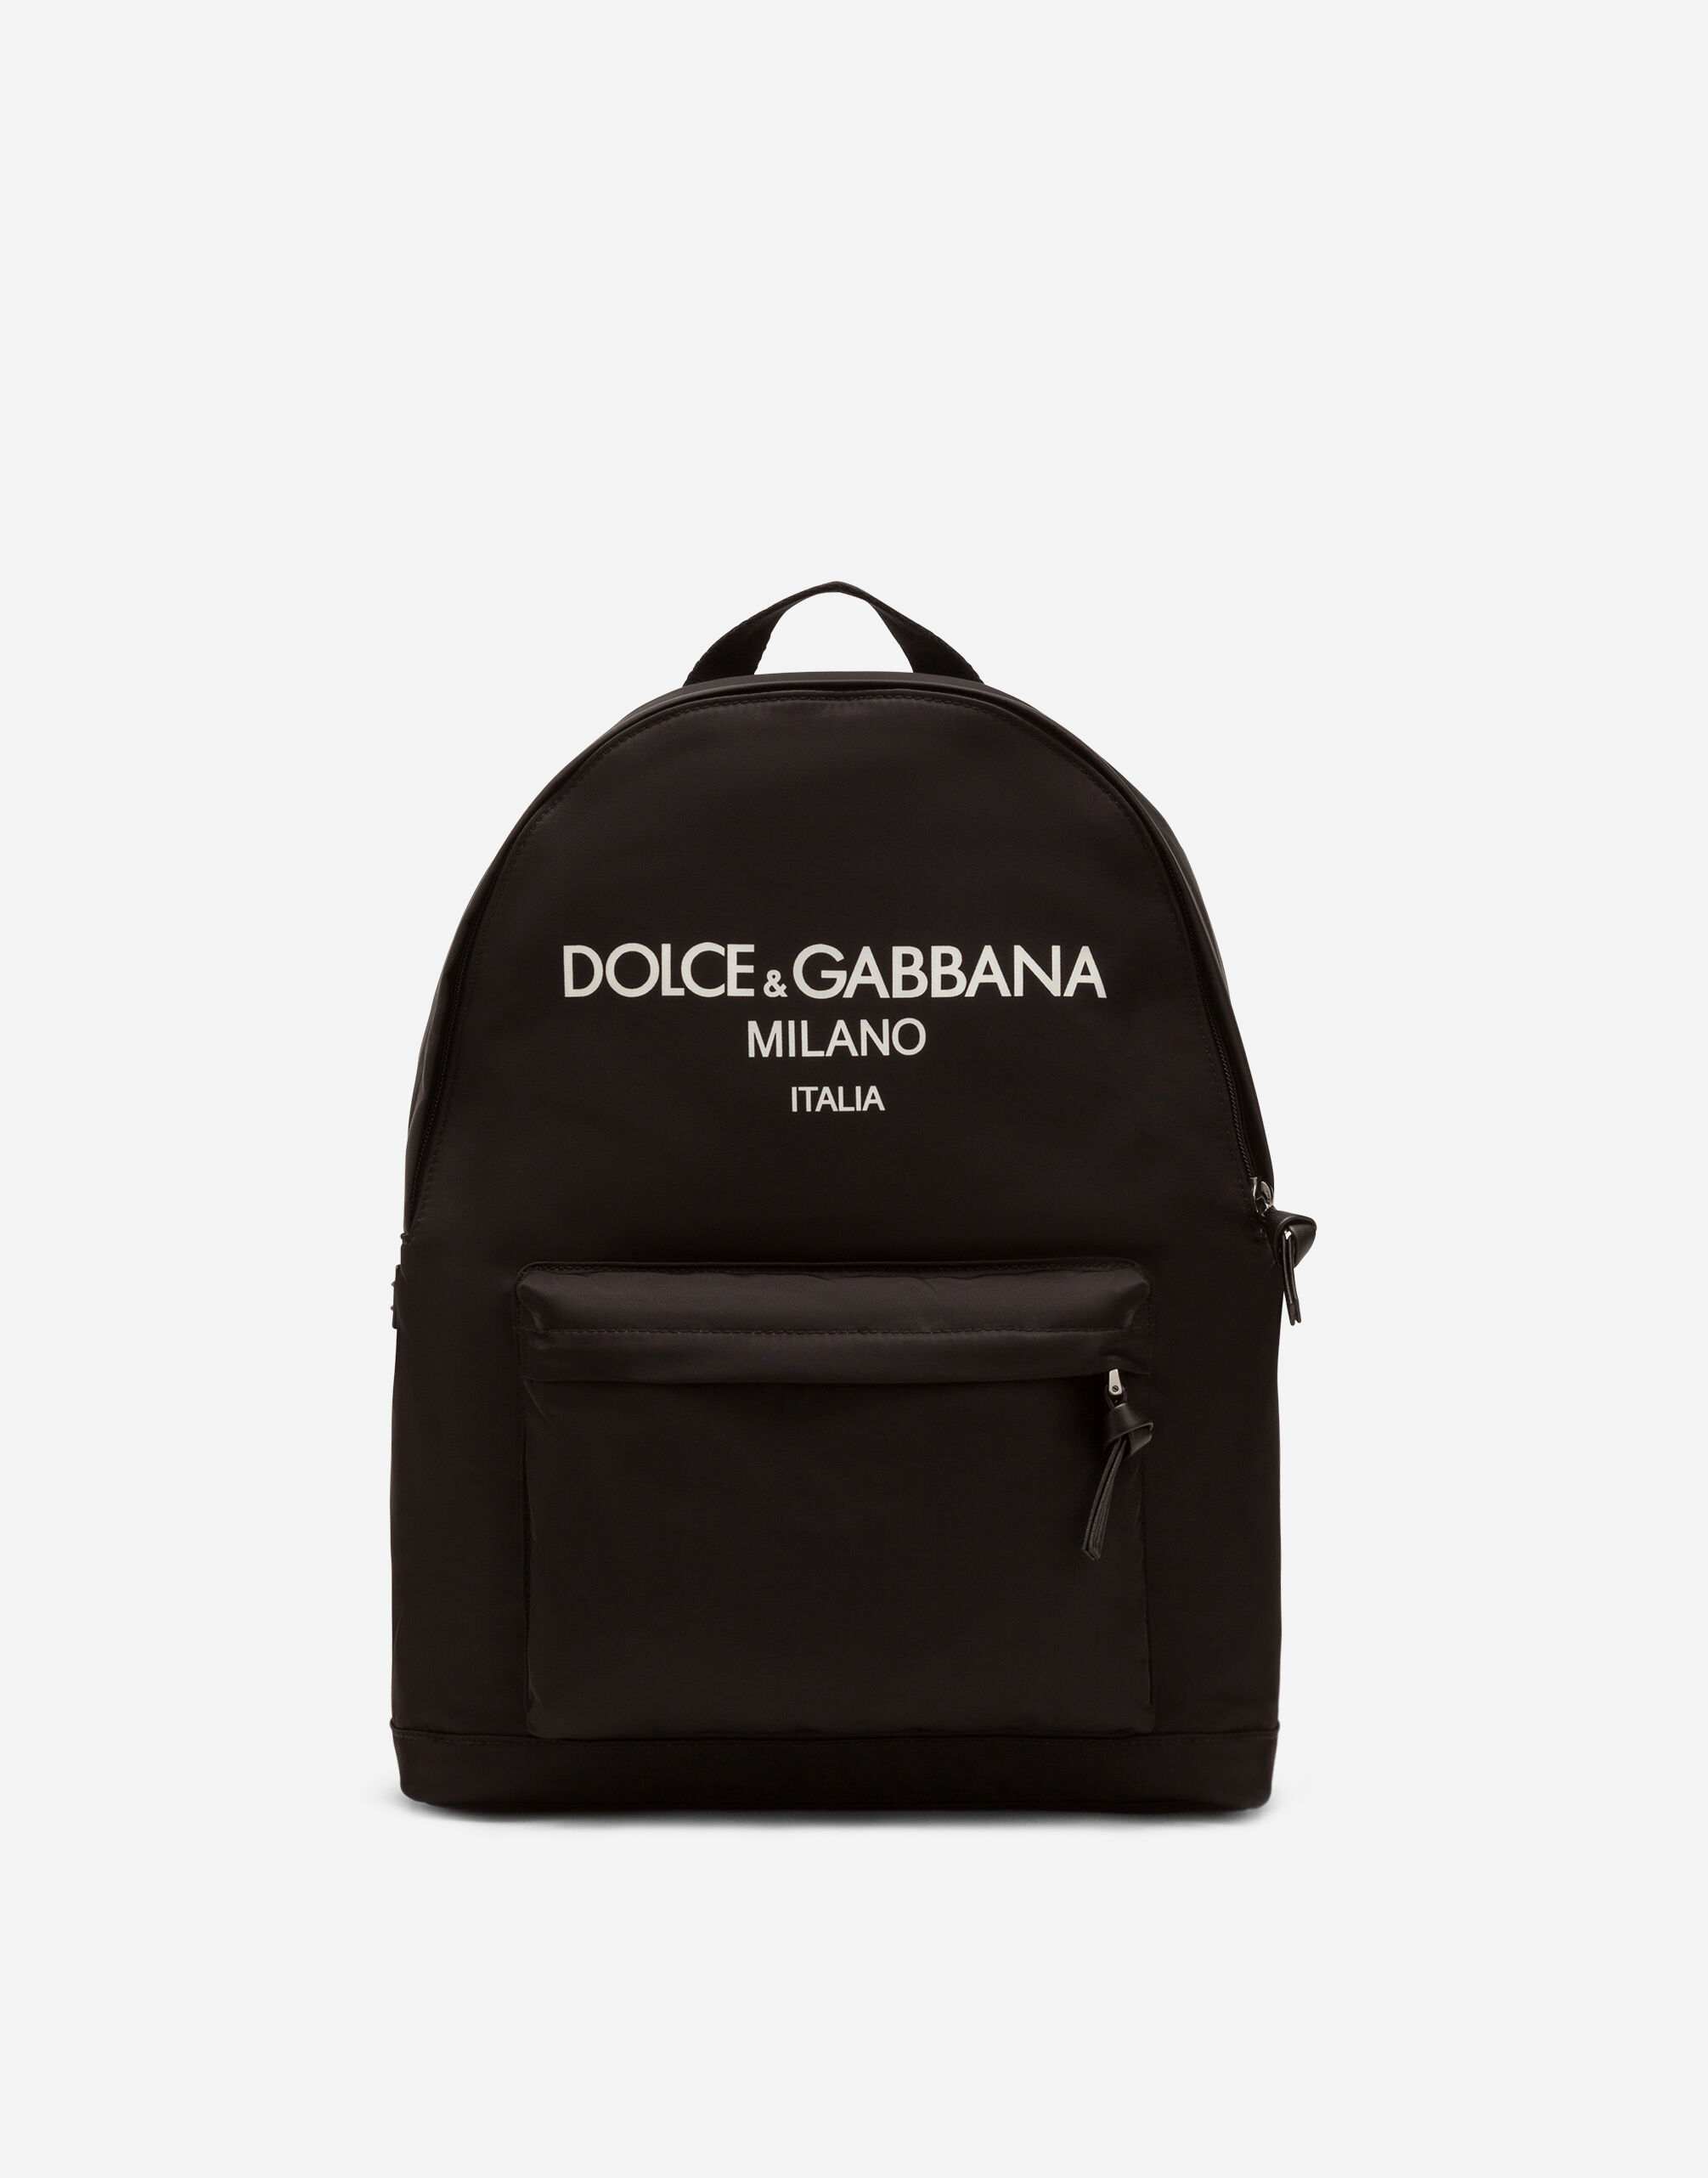 Nylon backpack with dolce&gabbana milano logo in BLACK for